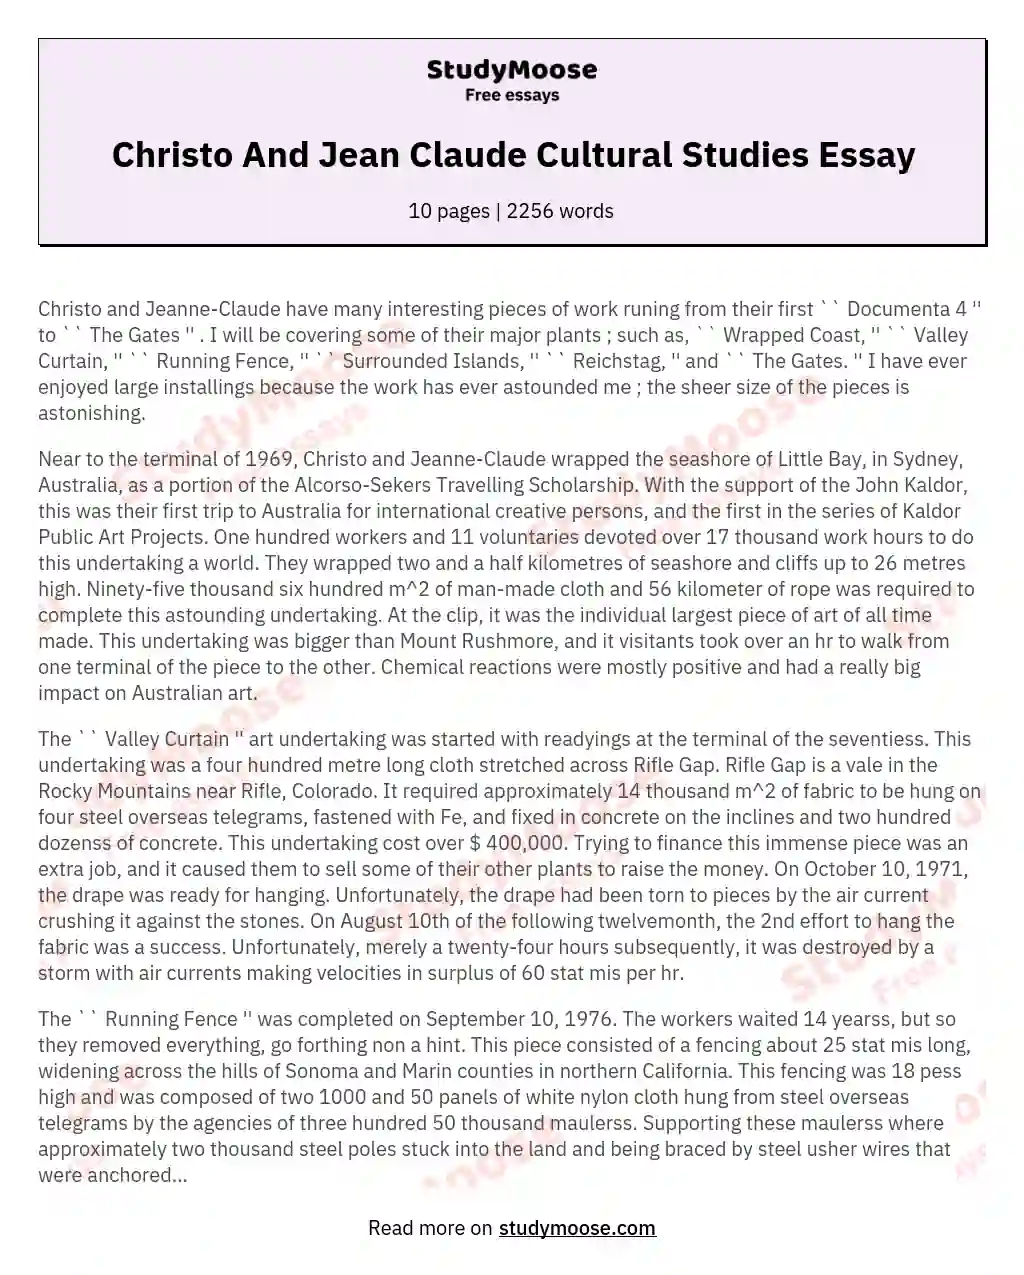 Christo And Jean Claude Cultural Studies Essay essay